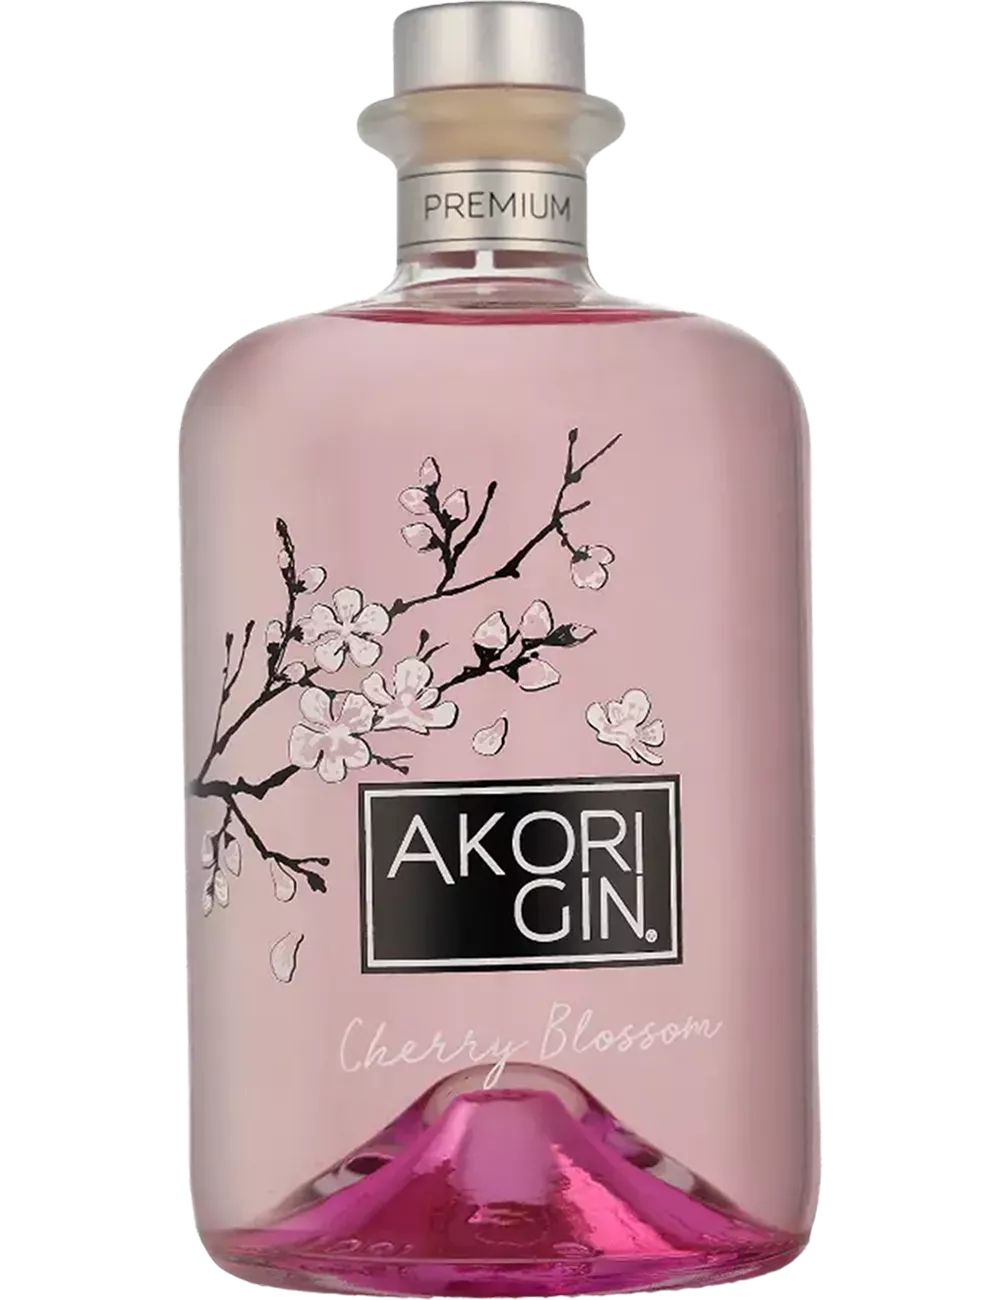 Akori Cherry Blossom - Distilled gin